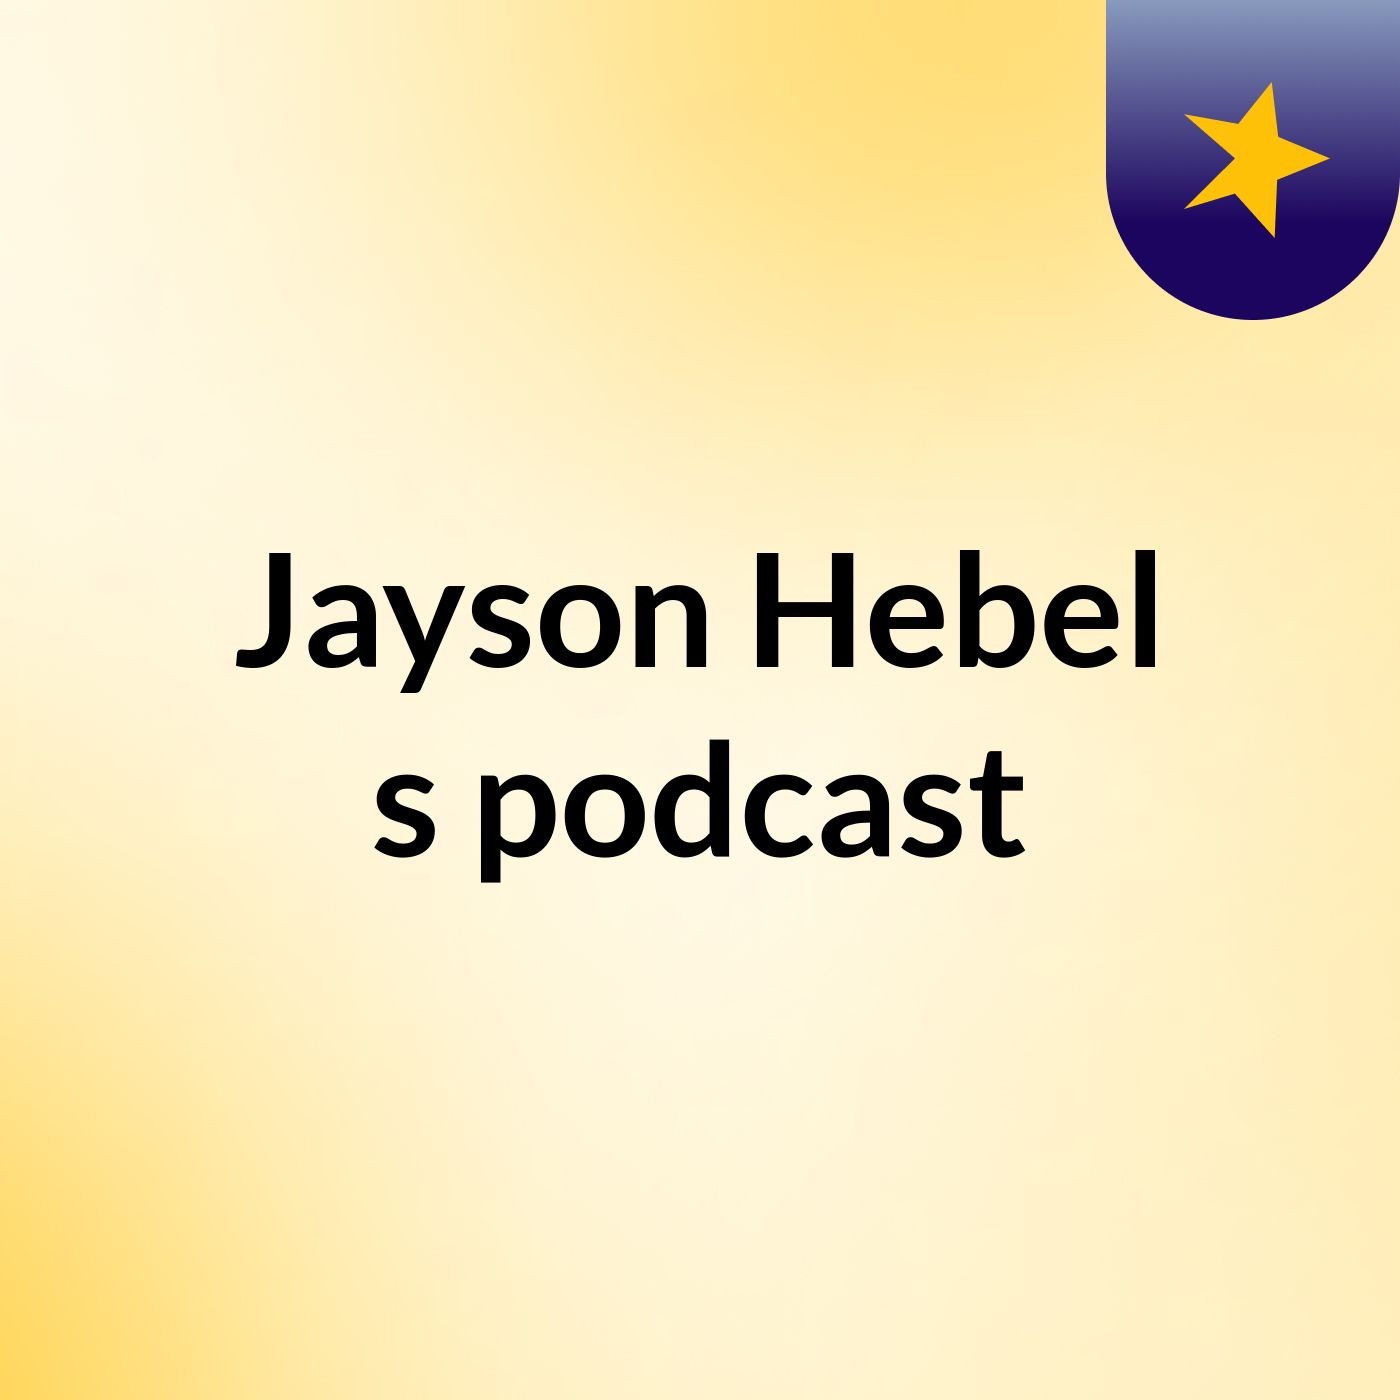 Jayson Hebel's podcast